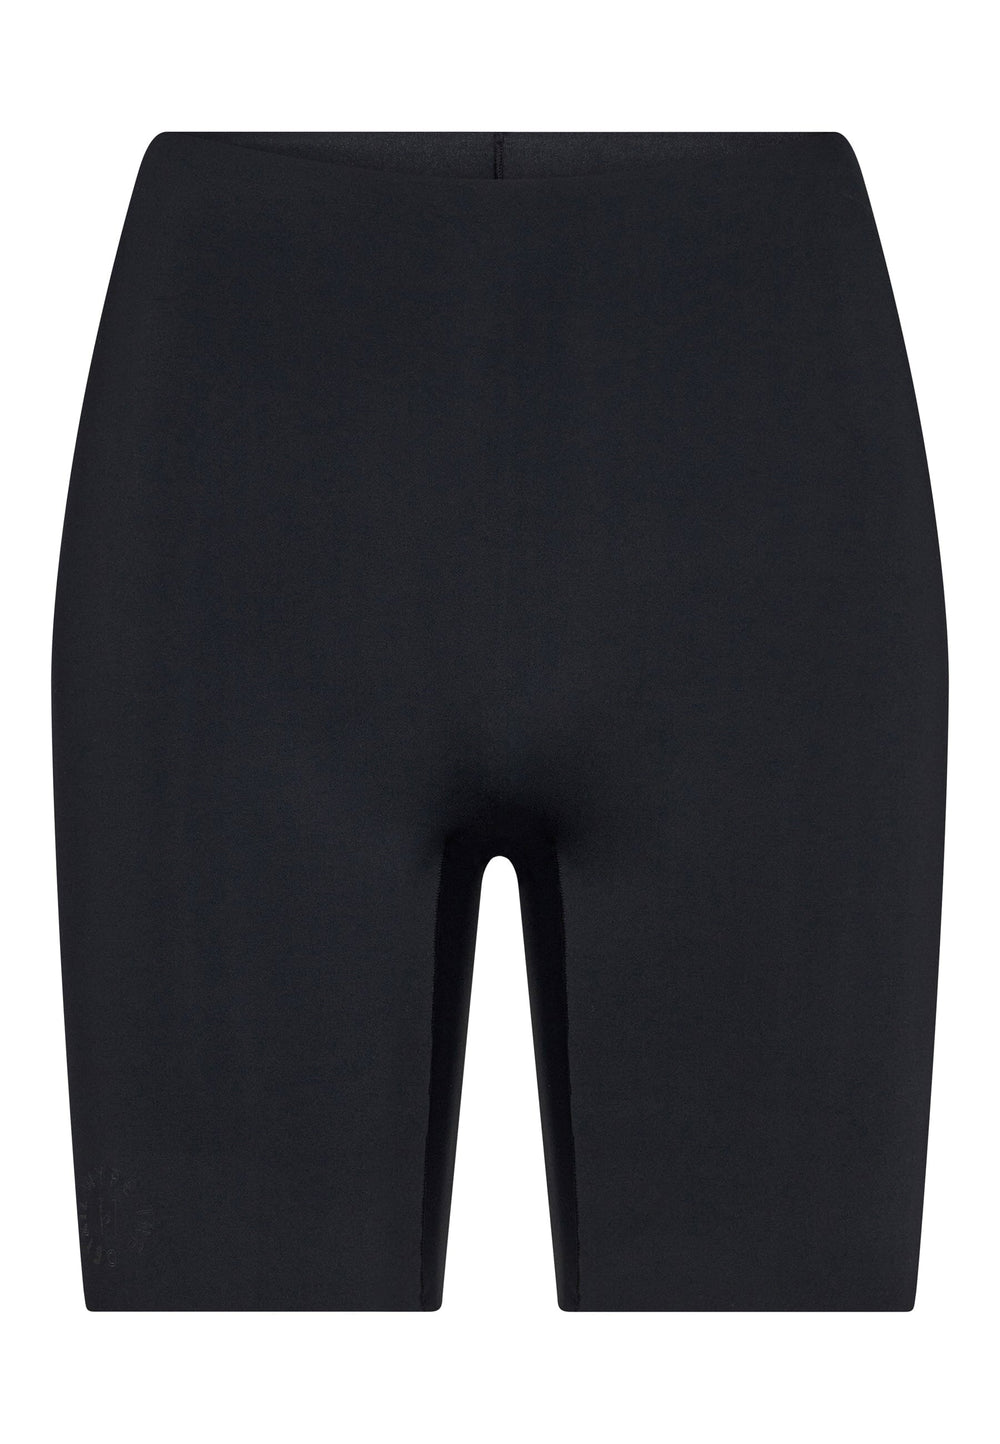 Hype The Detail - Shorts - 9 Sort Shorts 